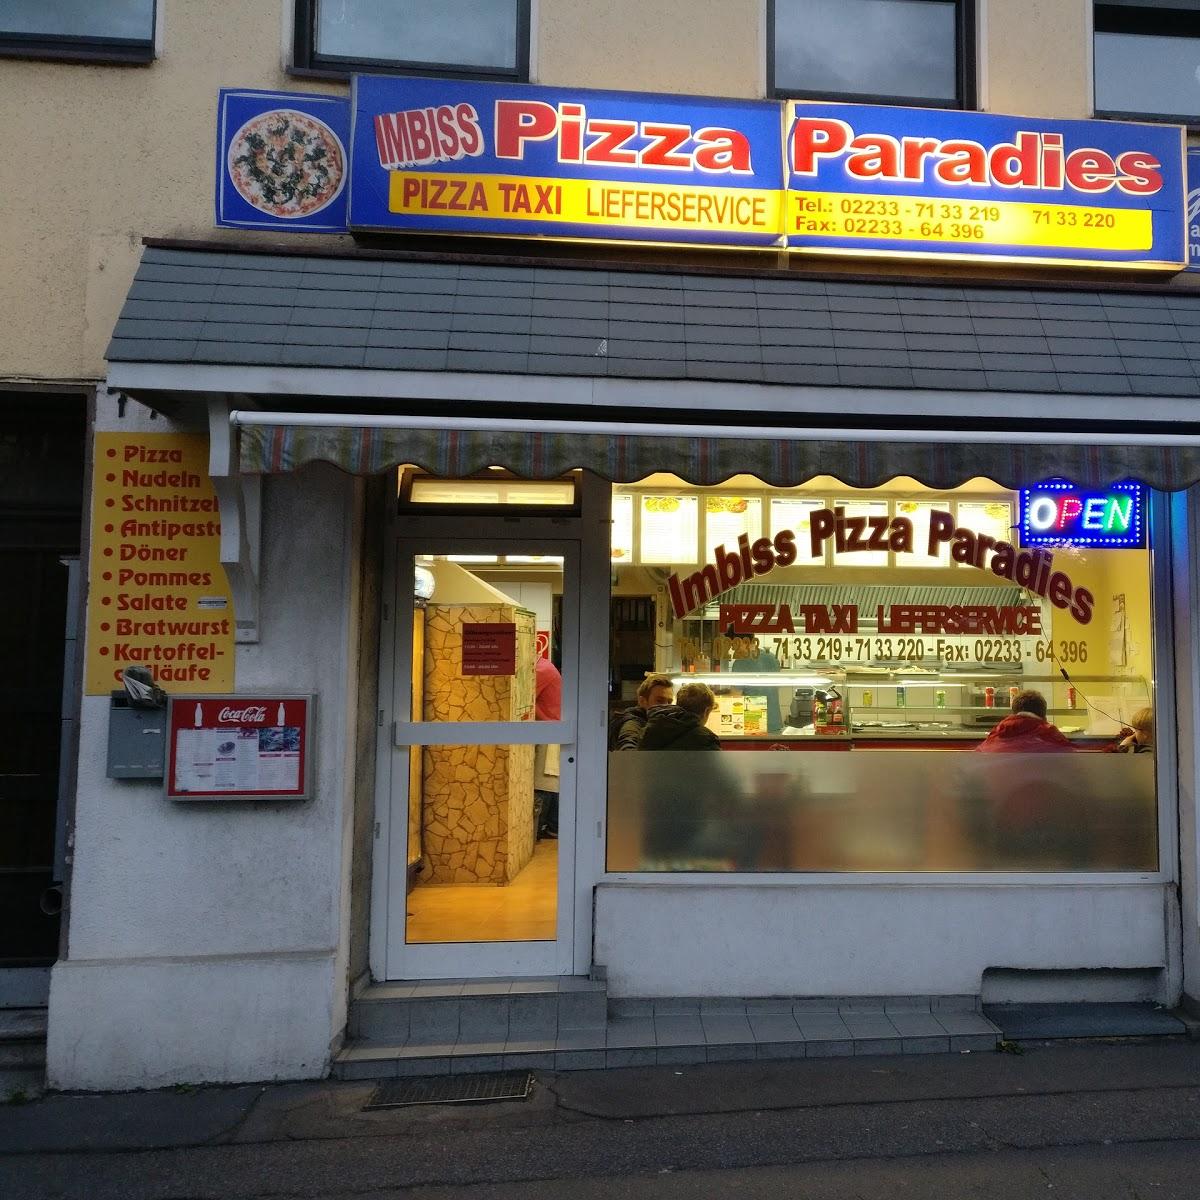 Restaurant "Pizza Paradies" in Hürth